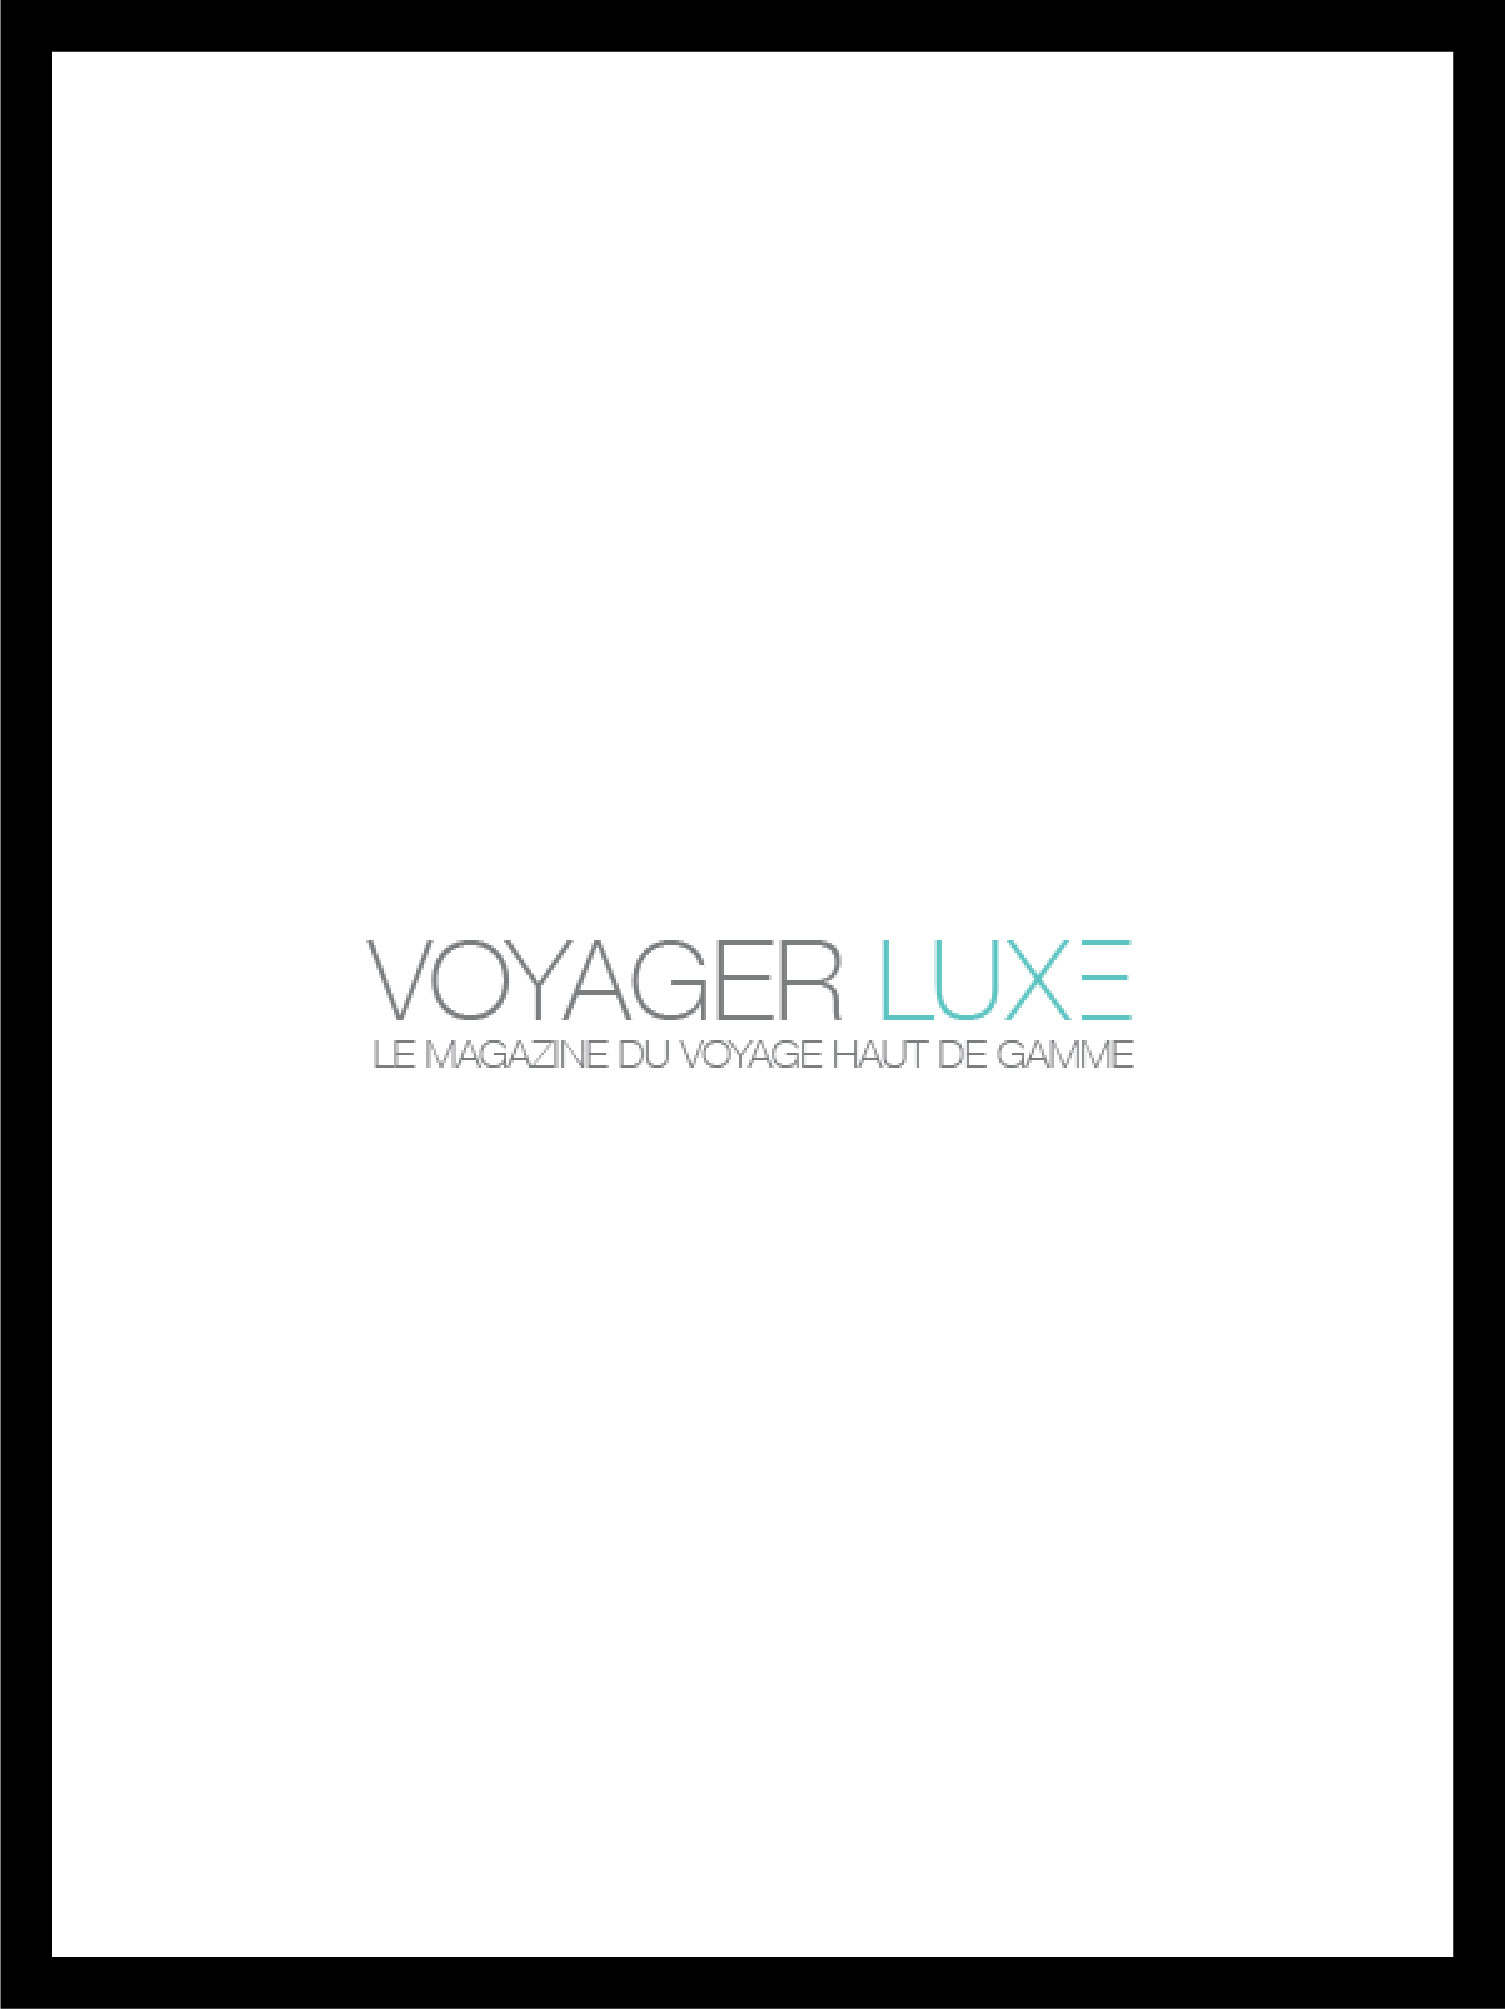 couverture et logo magazine voyager luxe